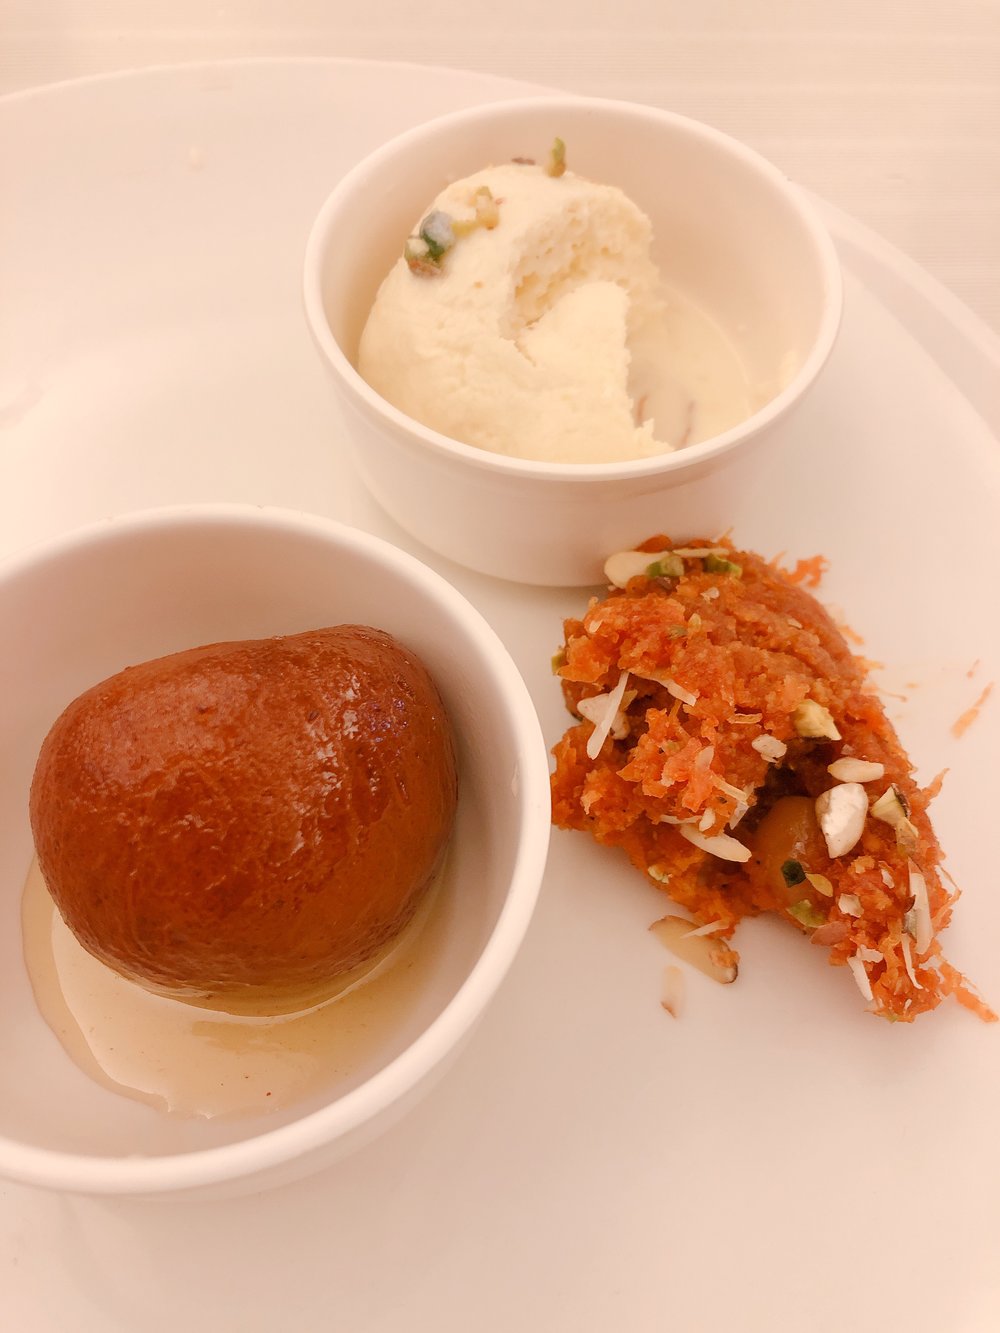  Dessert!! Top: kesari rasmalai, a  bready dumpling. Left: gulab jamun, a sugar syrup fried dumpling. Right: gajar halwa, grated carrots and nuts. 